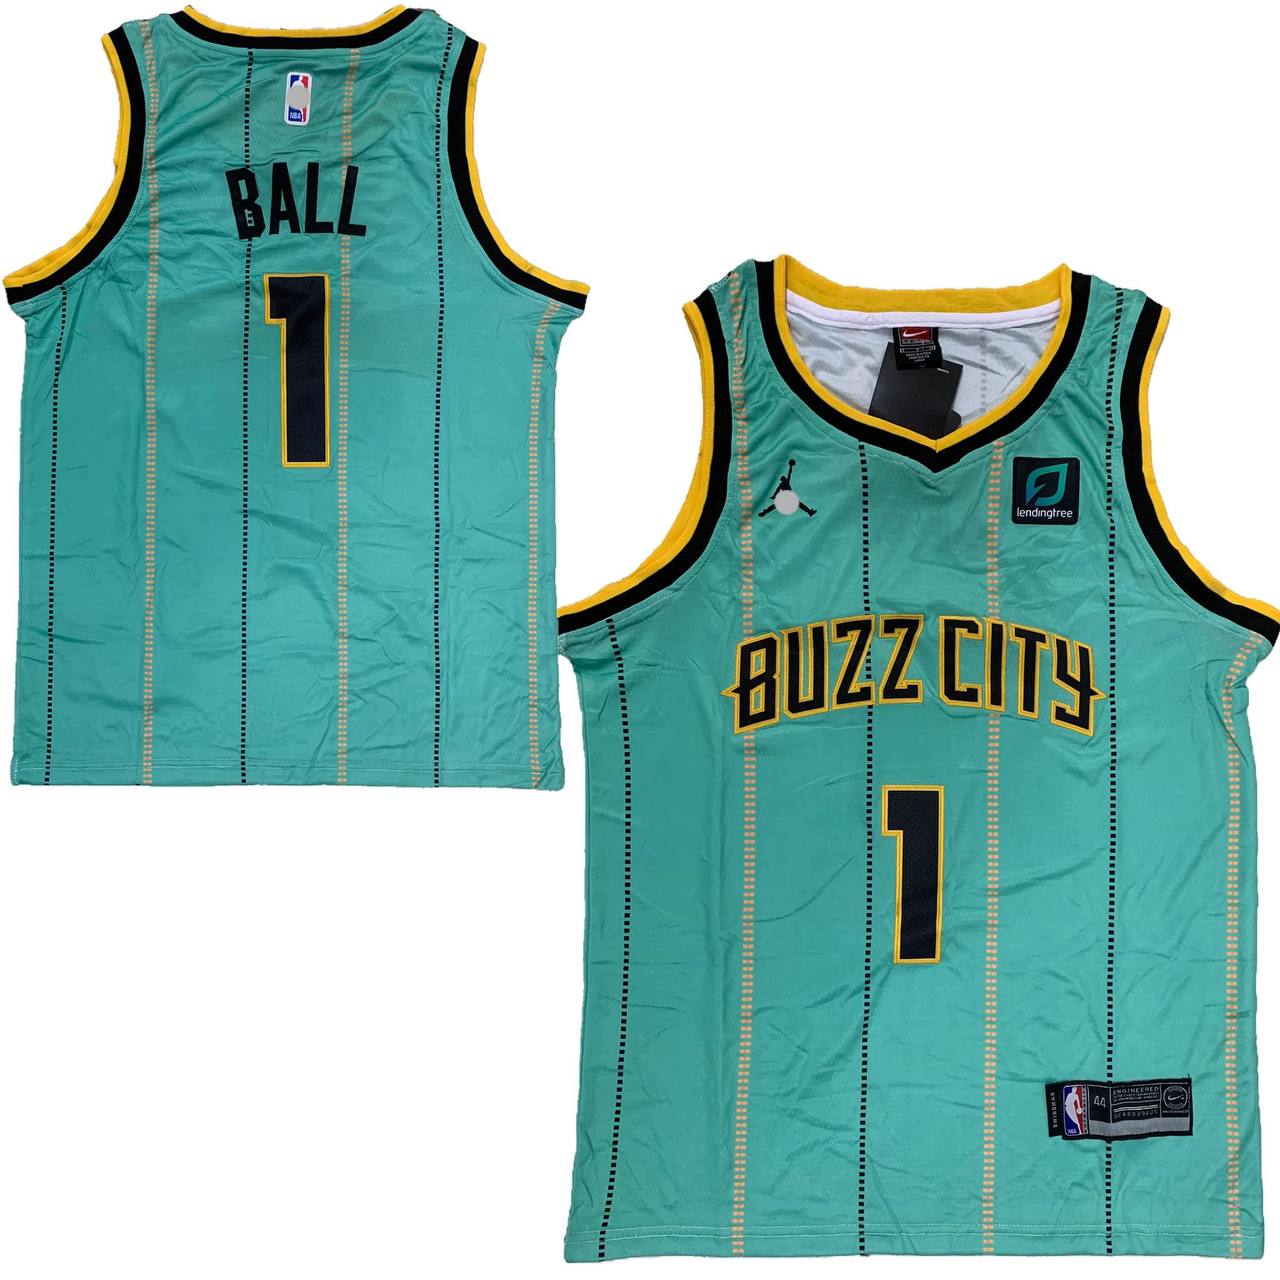 Lamelo Ball Buzz City Charlotte Hornets Jersey Men's XL FAST